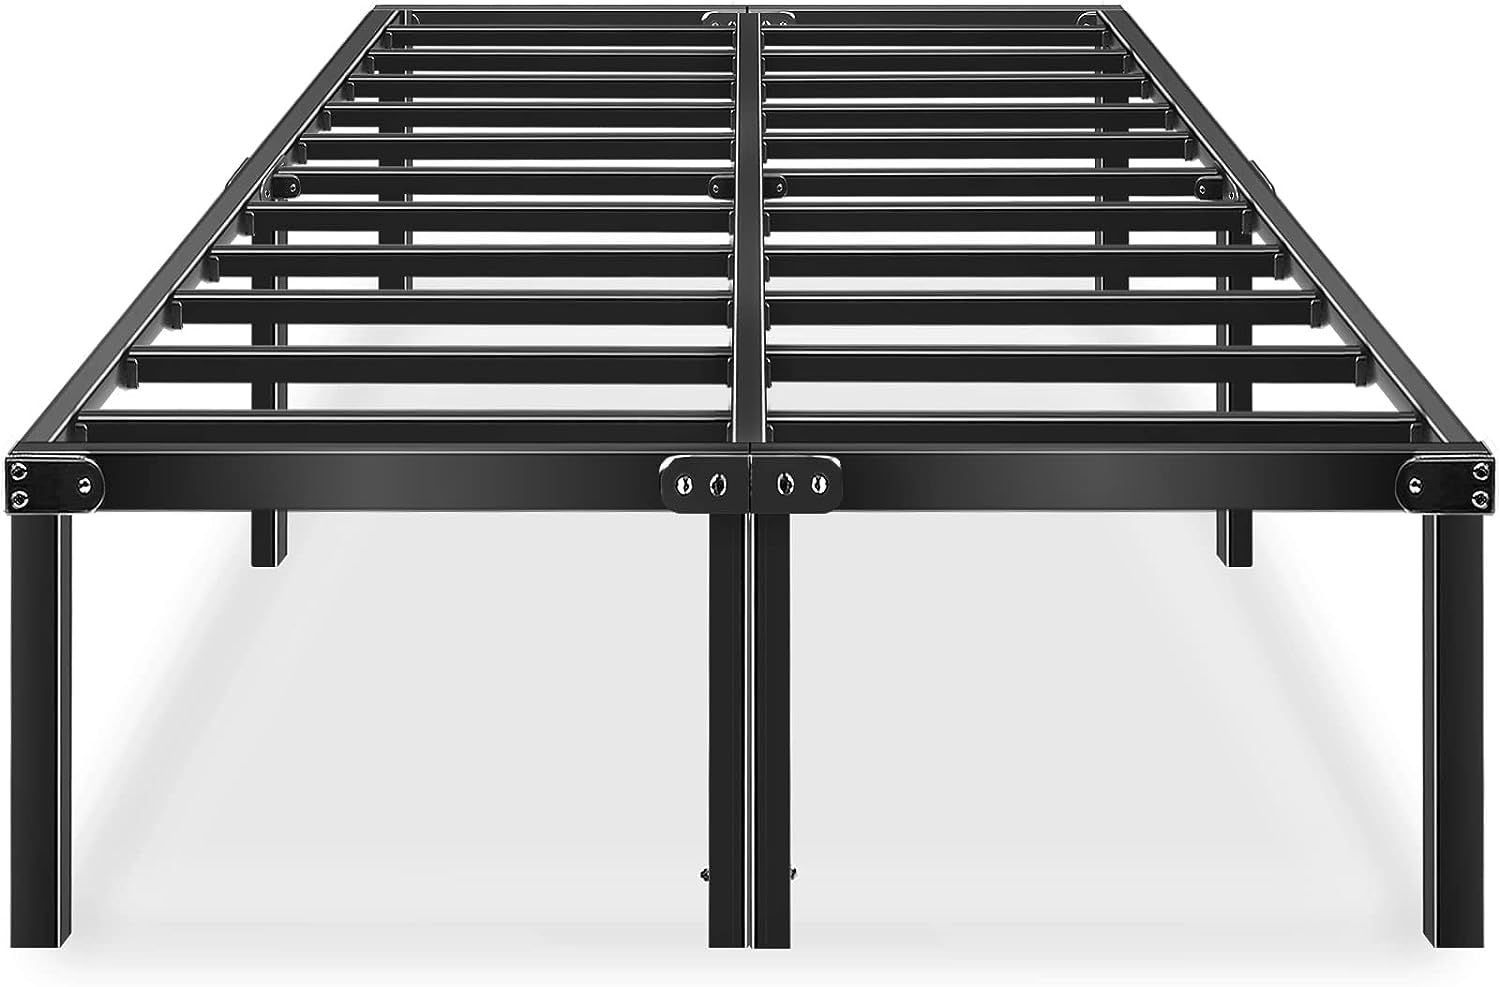 Sleep in Style: Comparing 5 Modern Metal Platform Bed Frames